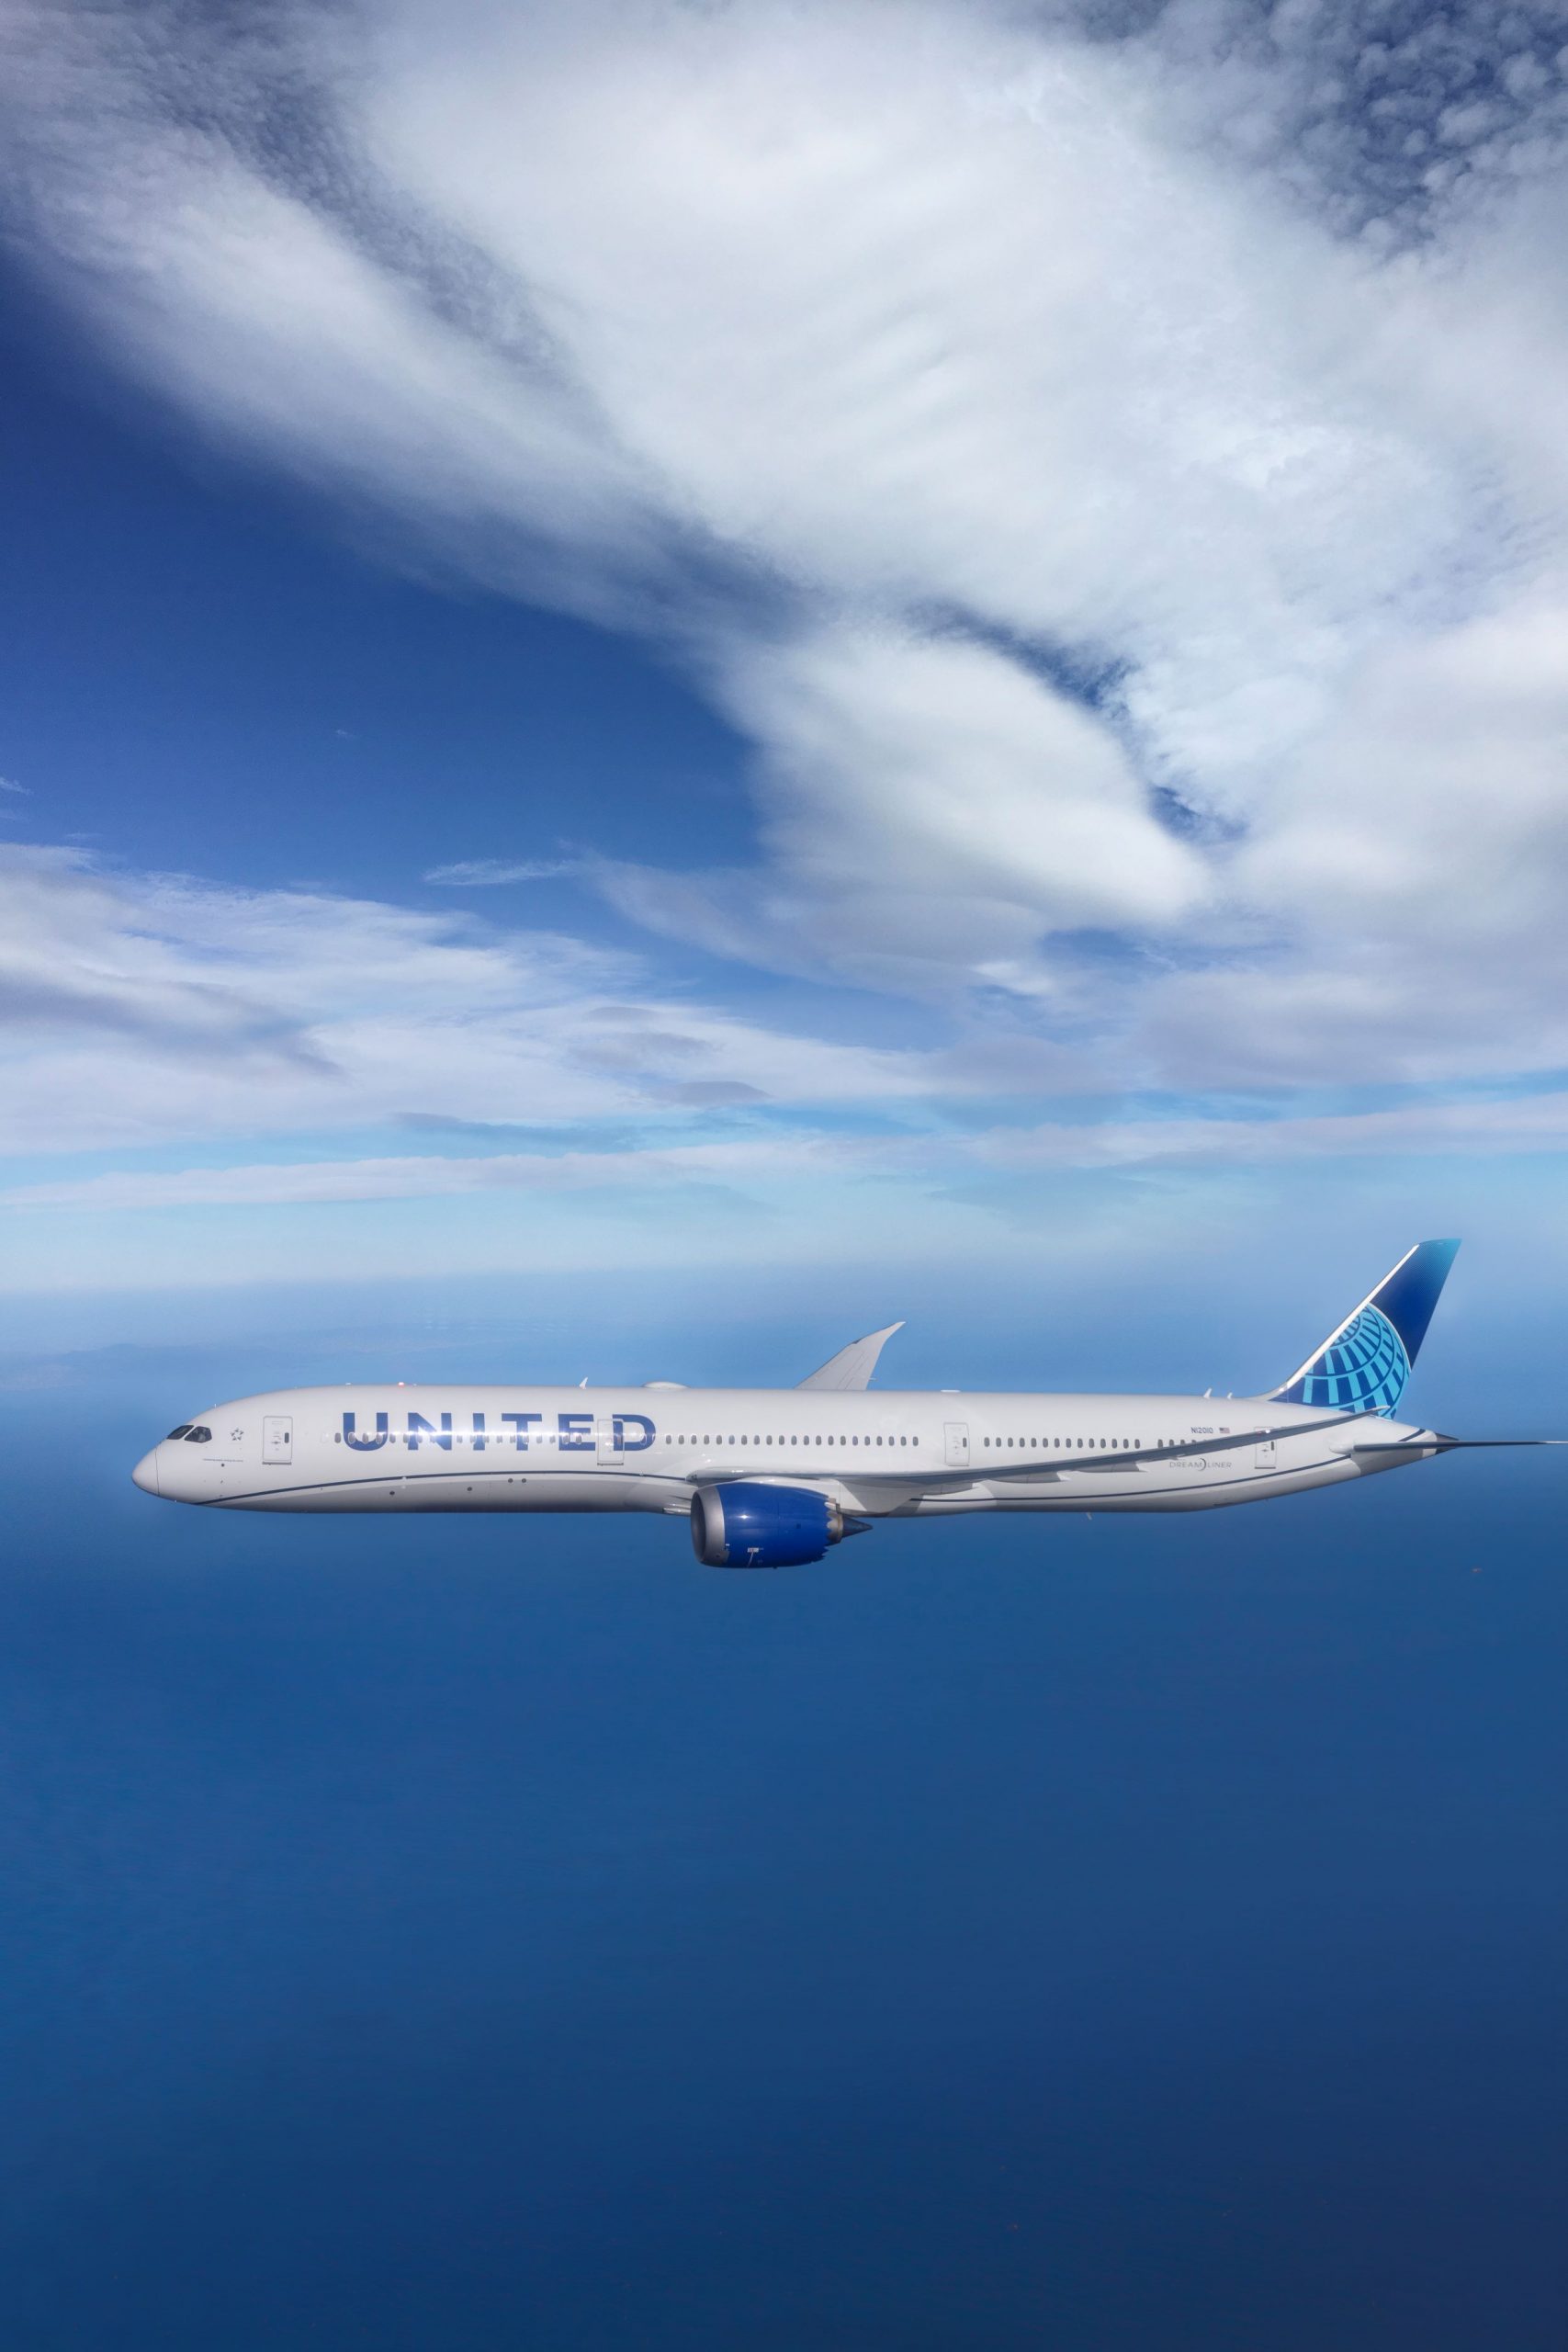 United Airlines plane flying over ocean